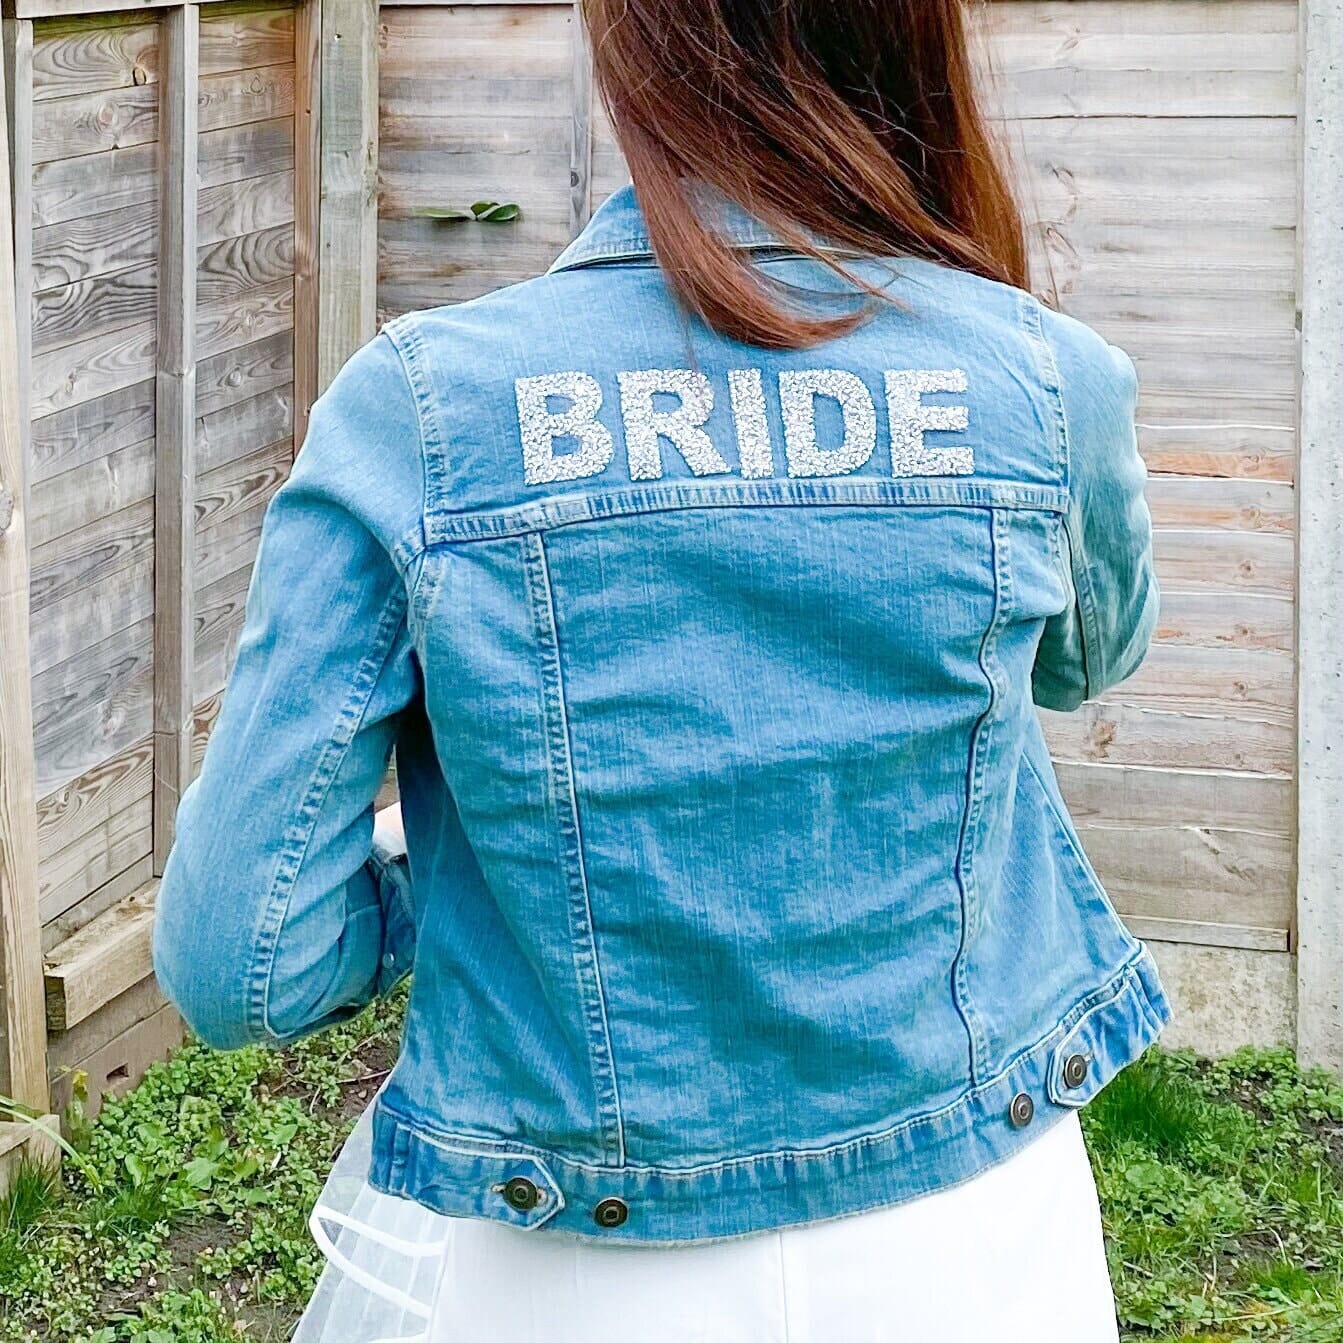 Bride denim jacket with sparkly rhinestone letters, Bridal Shower Engagement Gift, Mrs Wedding jacket